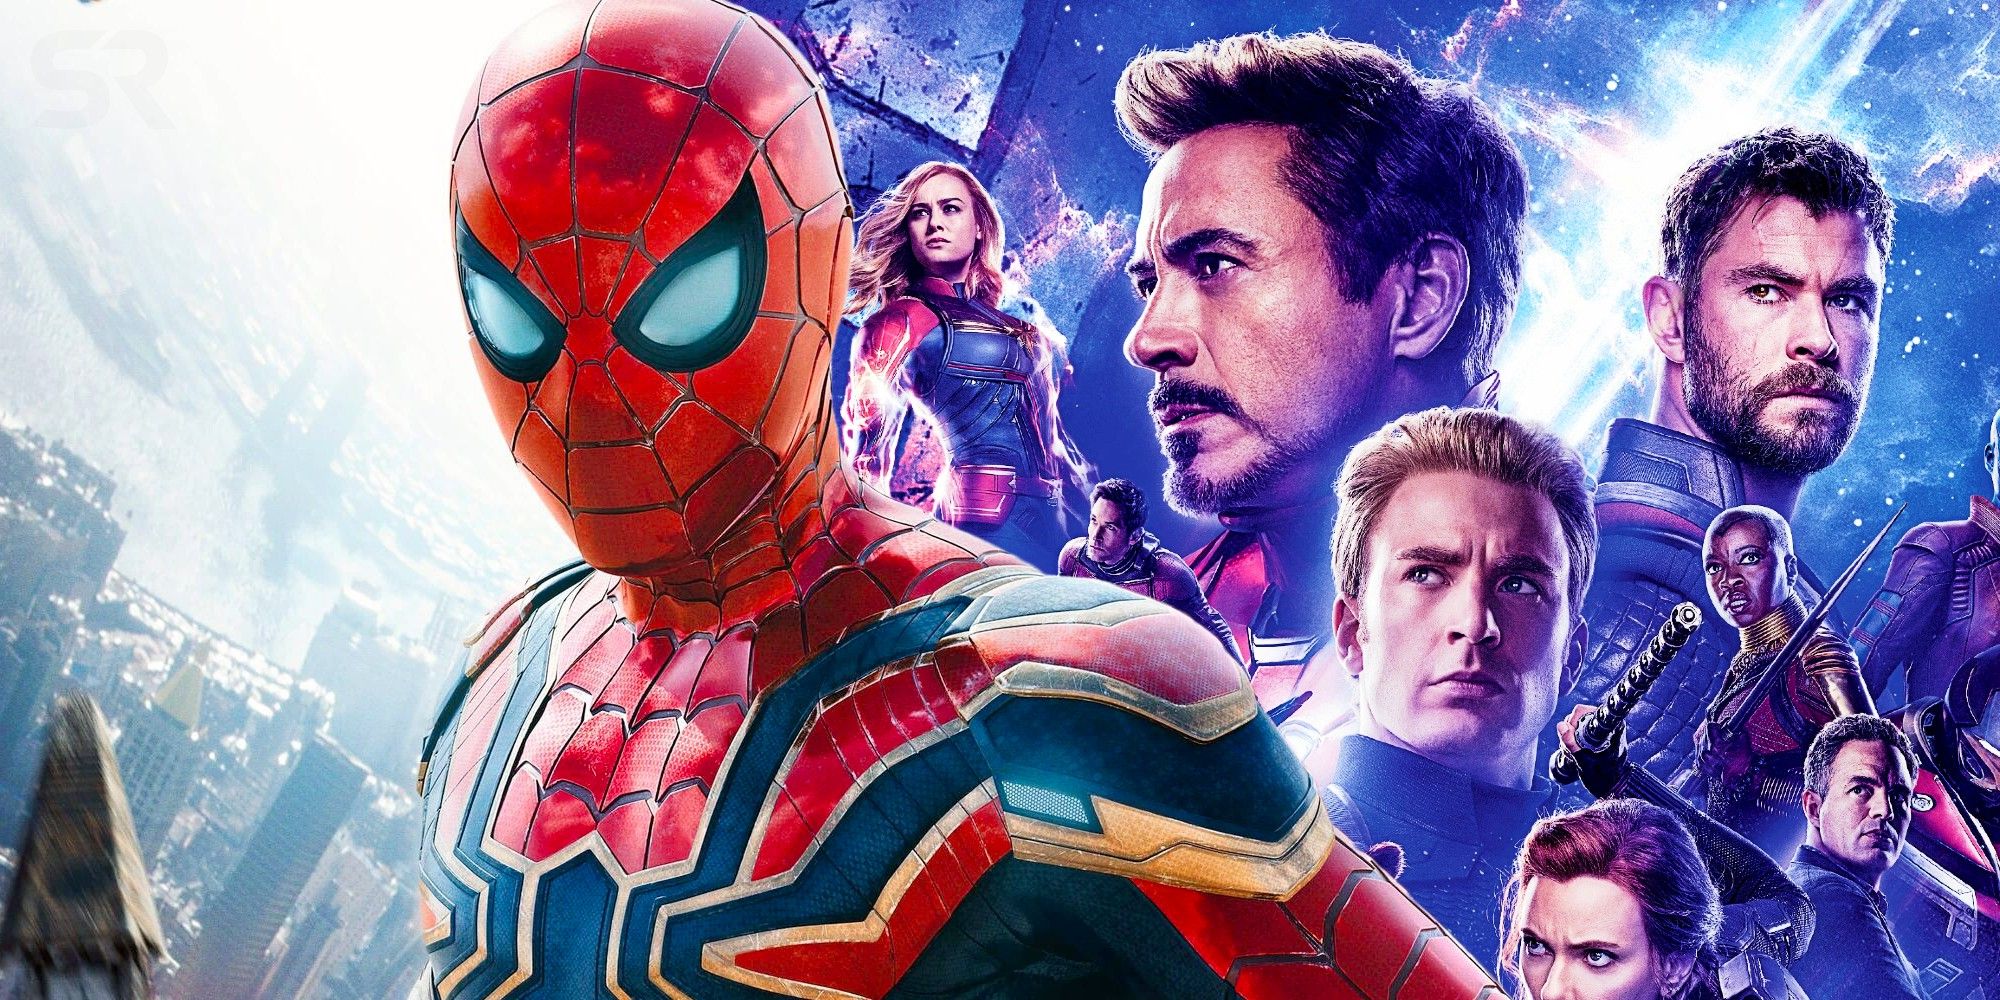 Spider-Man-No-Way-Home-Avengers-Endgame-Box-Office-SR.jpg